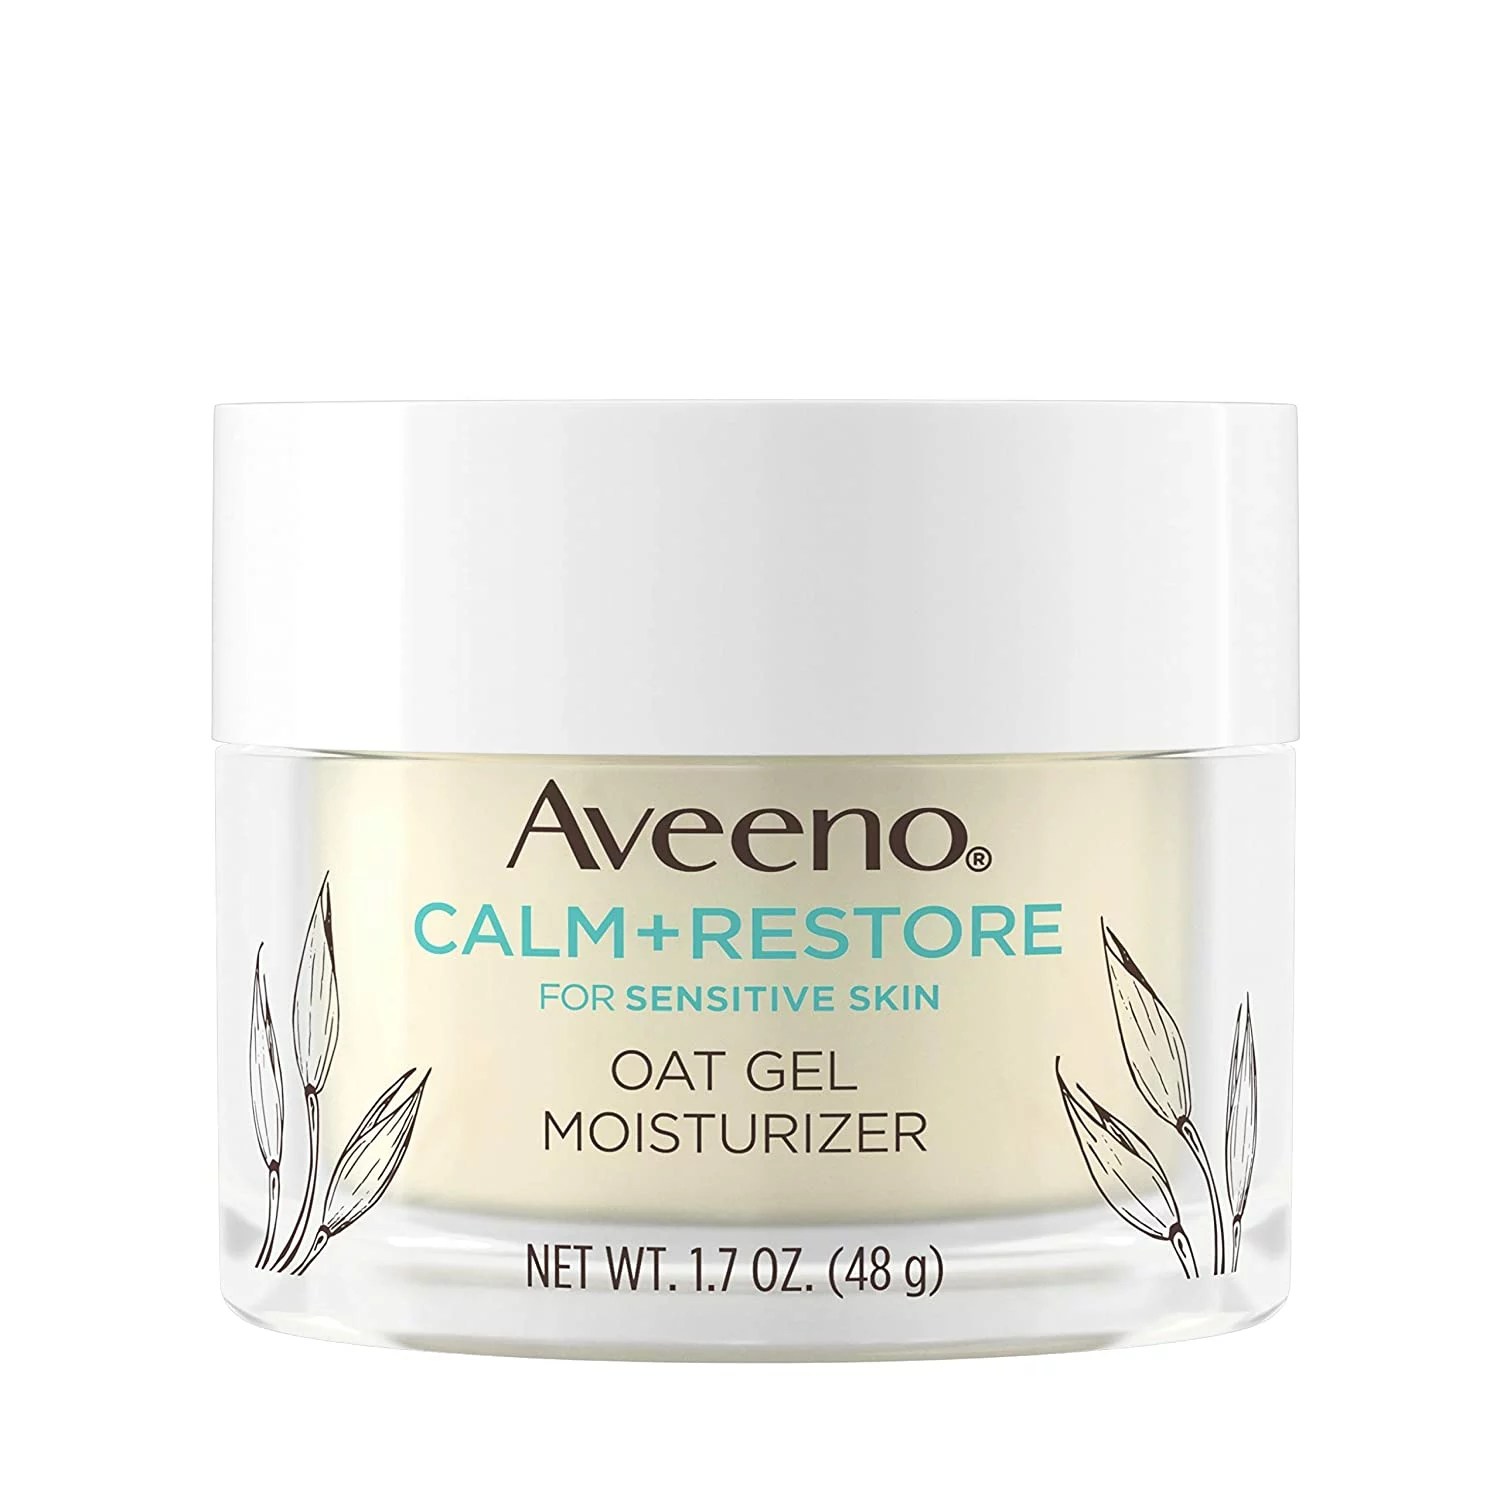 A jar of aveeno calm and restore oat gel moisturizers dry skin